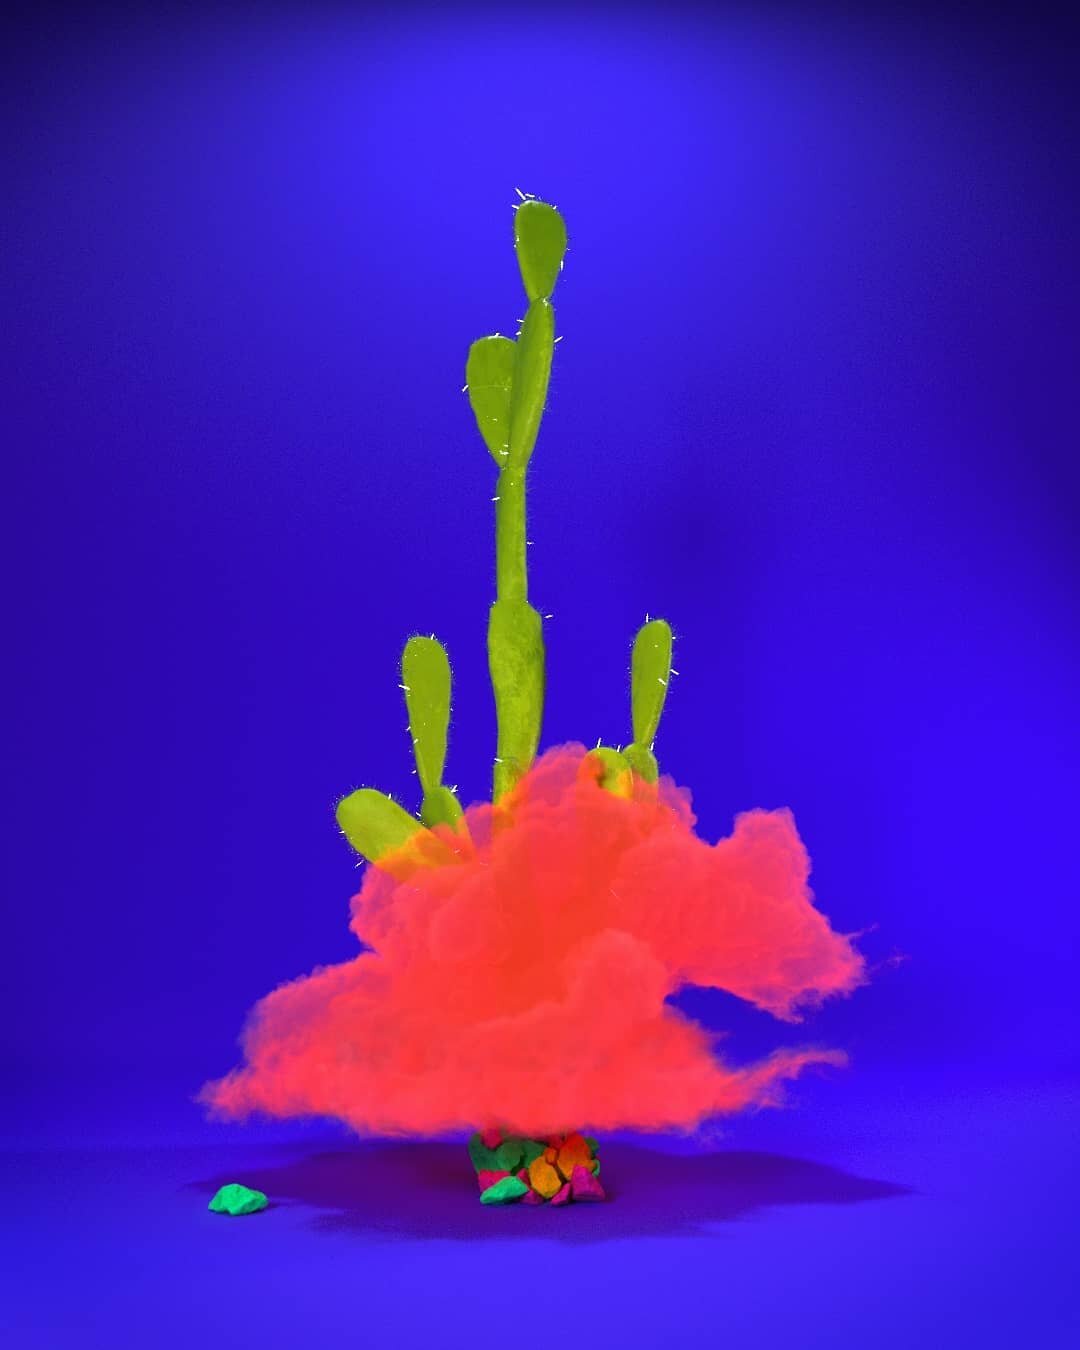 Dreaming Cactus.
.
.
.
#cinema4d #art #c4d #octane #3d #3dart #digital #digitalart  #artist #design #surreal #color #nature #graphicart #digitalart  #designart #instart #instaart #instaartist  #modernart #disney #megascan #uvworld #uv #blacklight